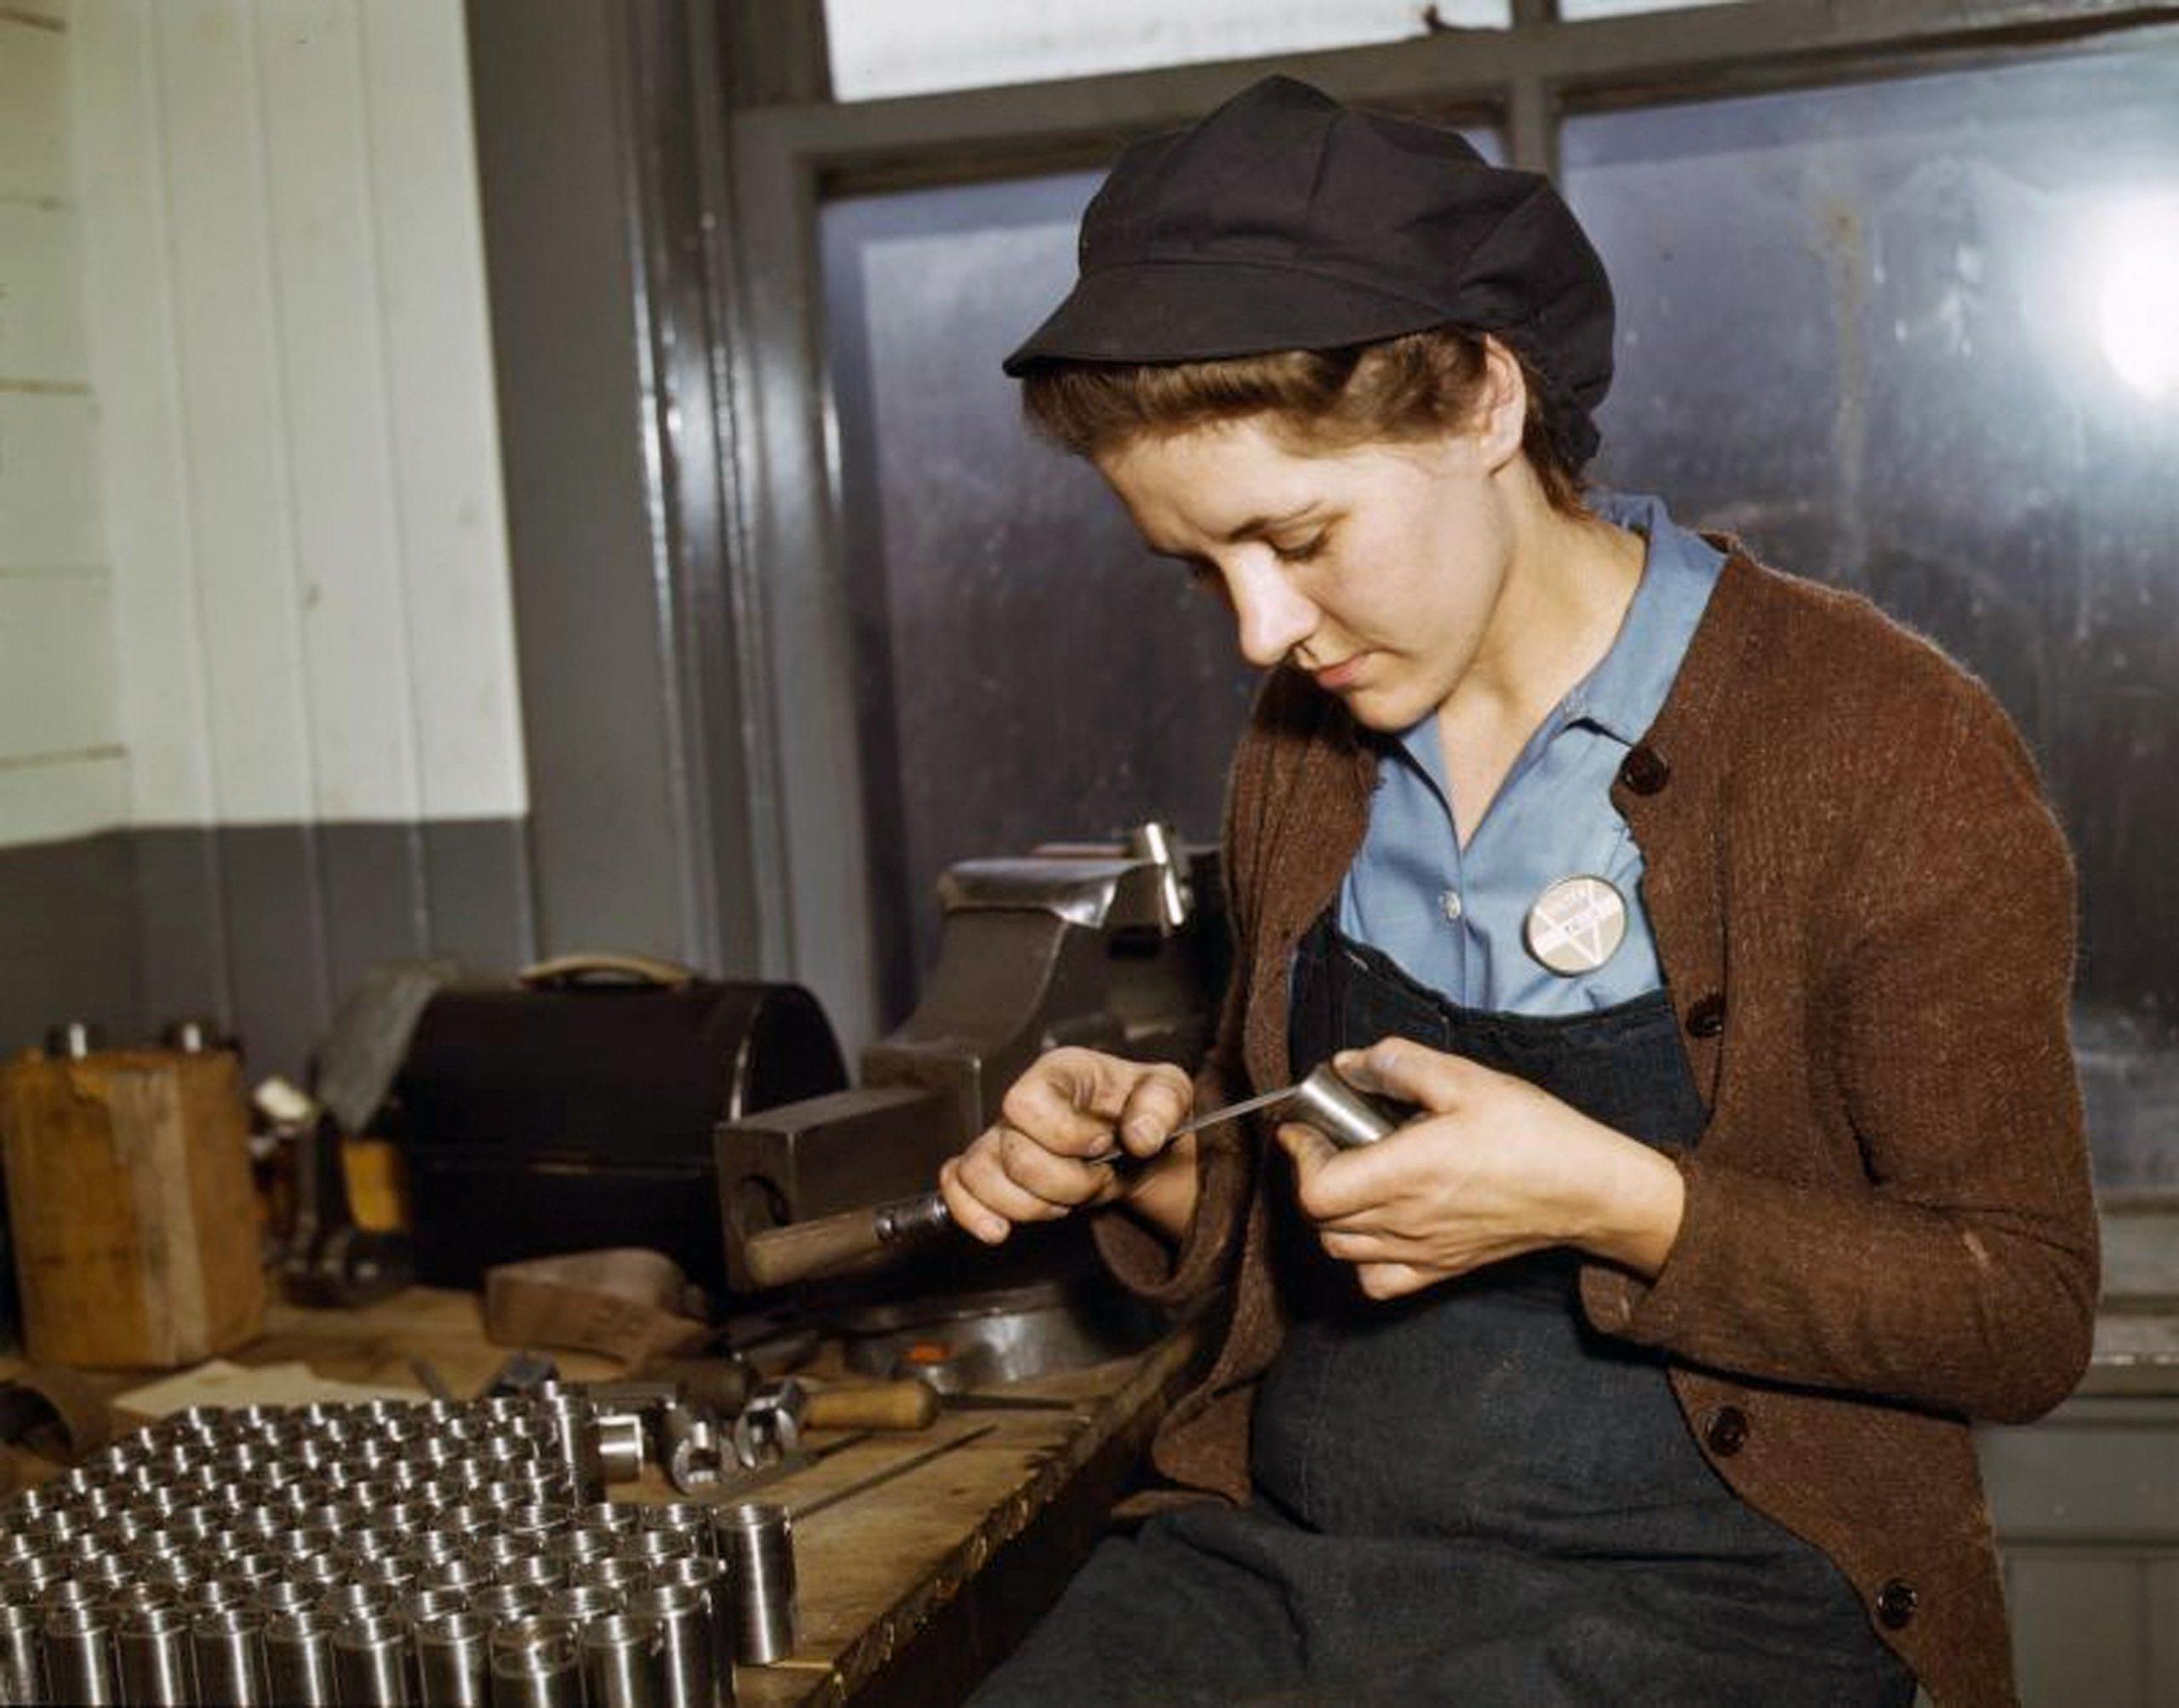 American female worker